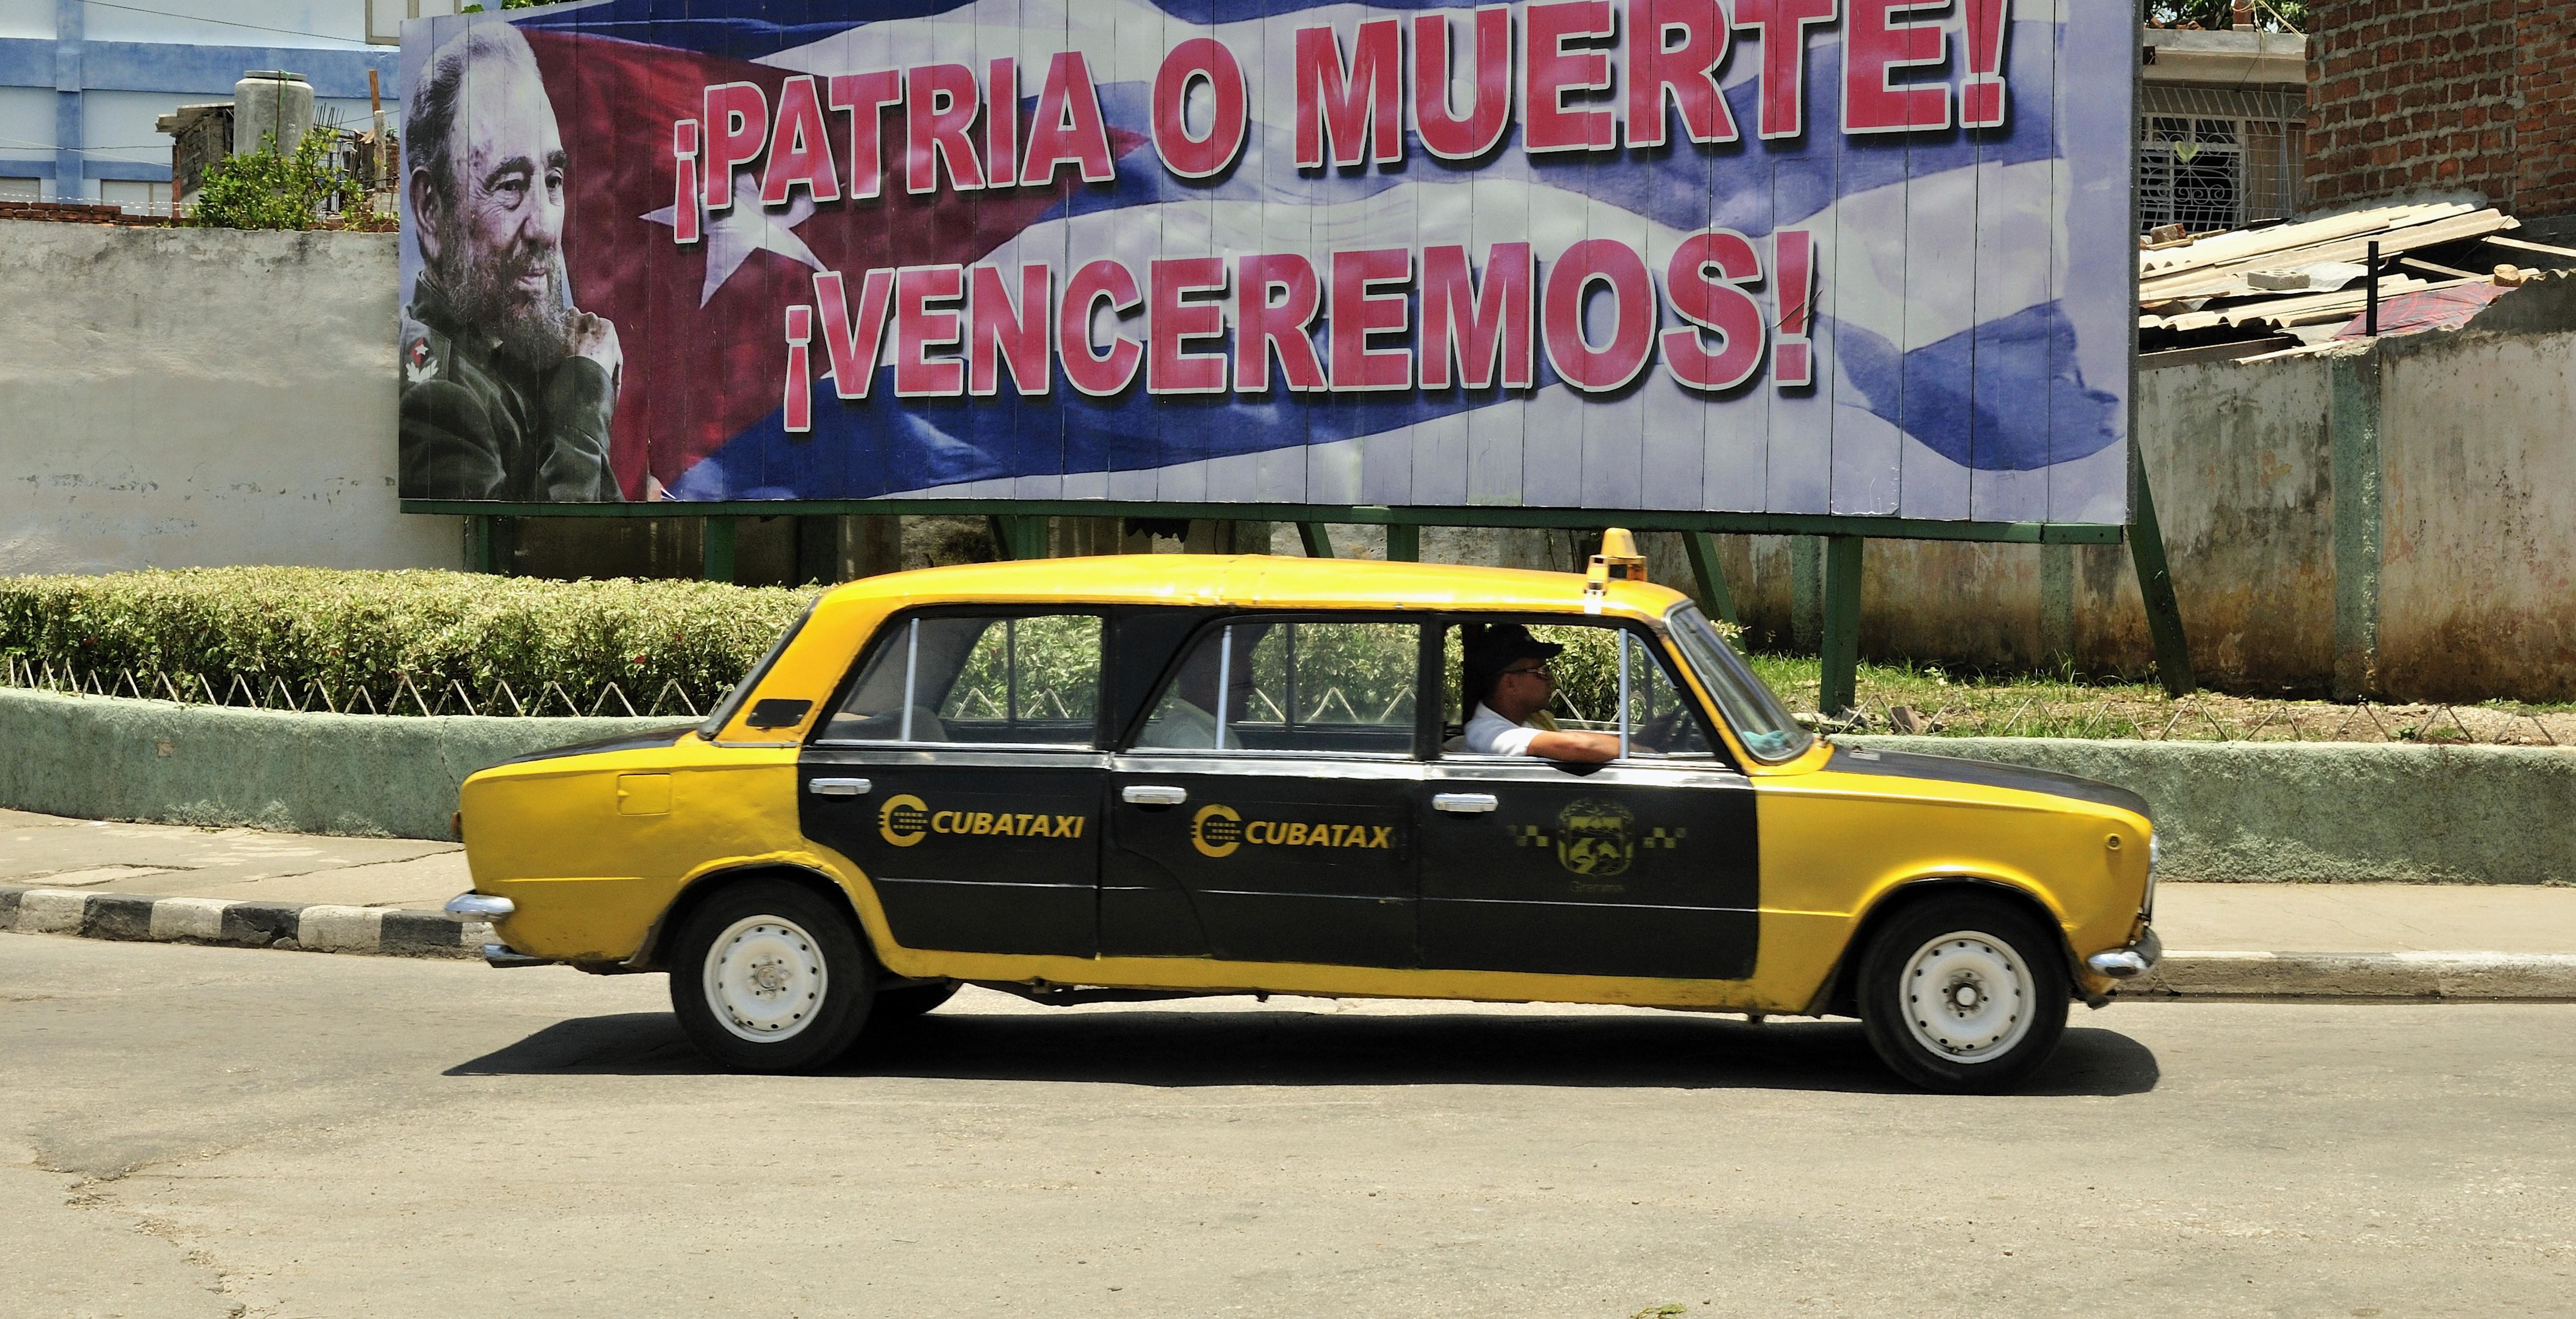 Lada resumes export to Cuba after twelve years